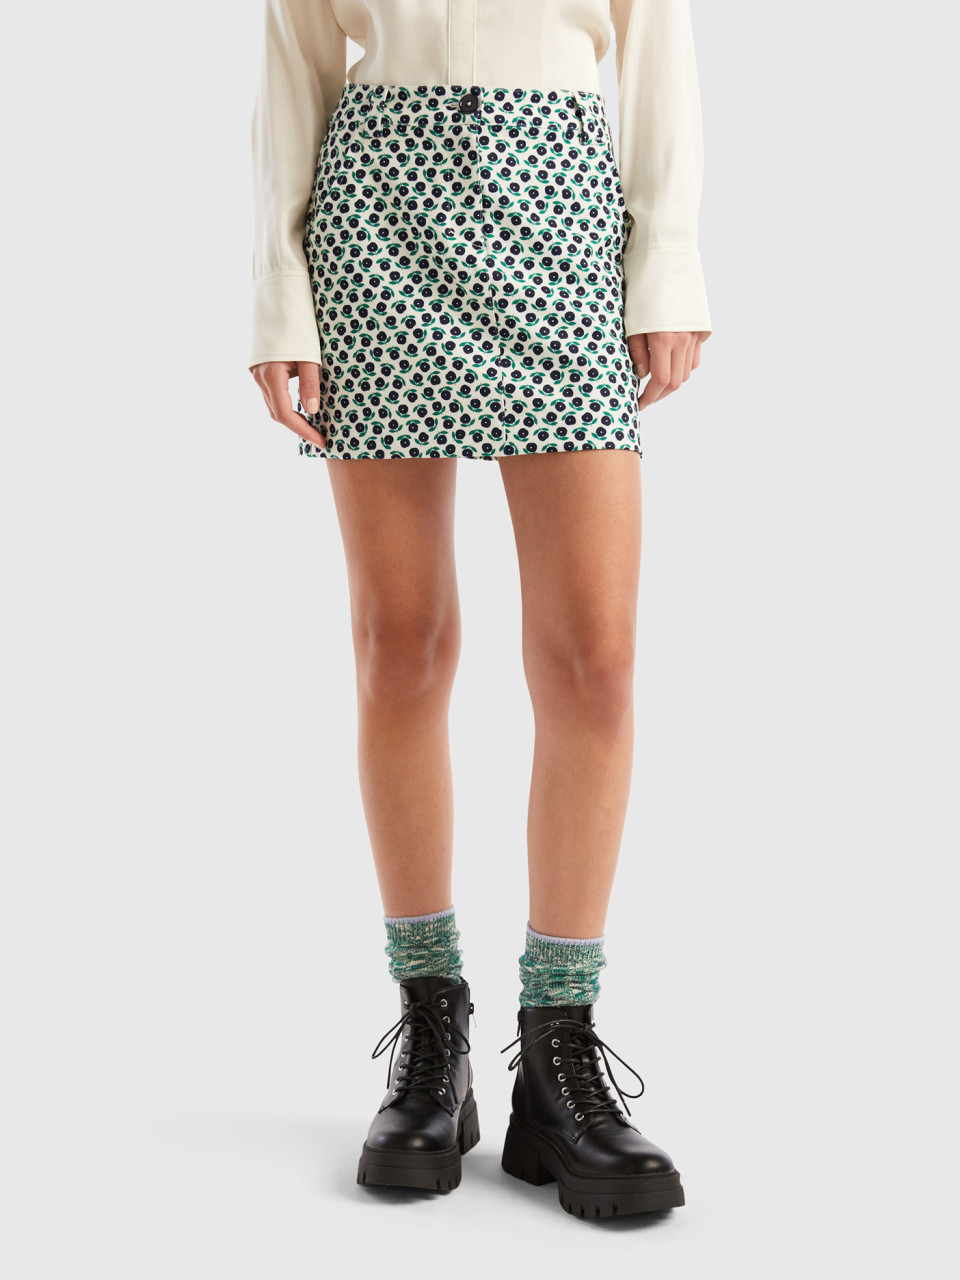 Benetton, Mini Skirt With Floral Print, Multi-color, Women